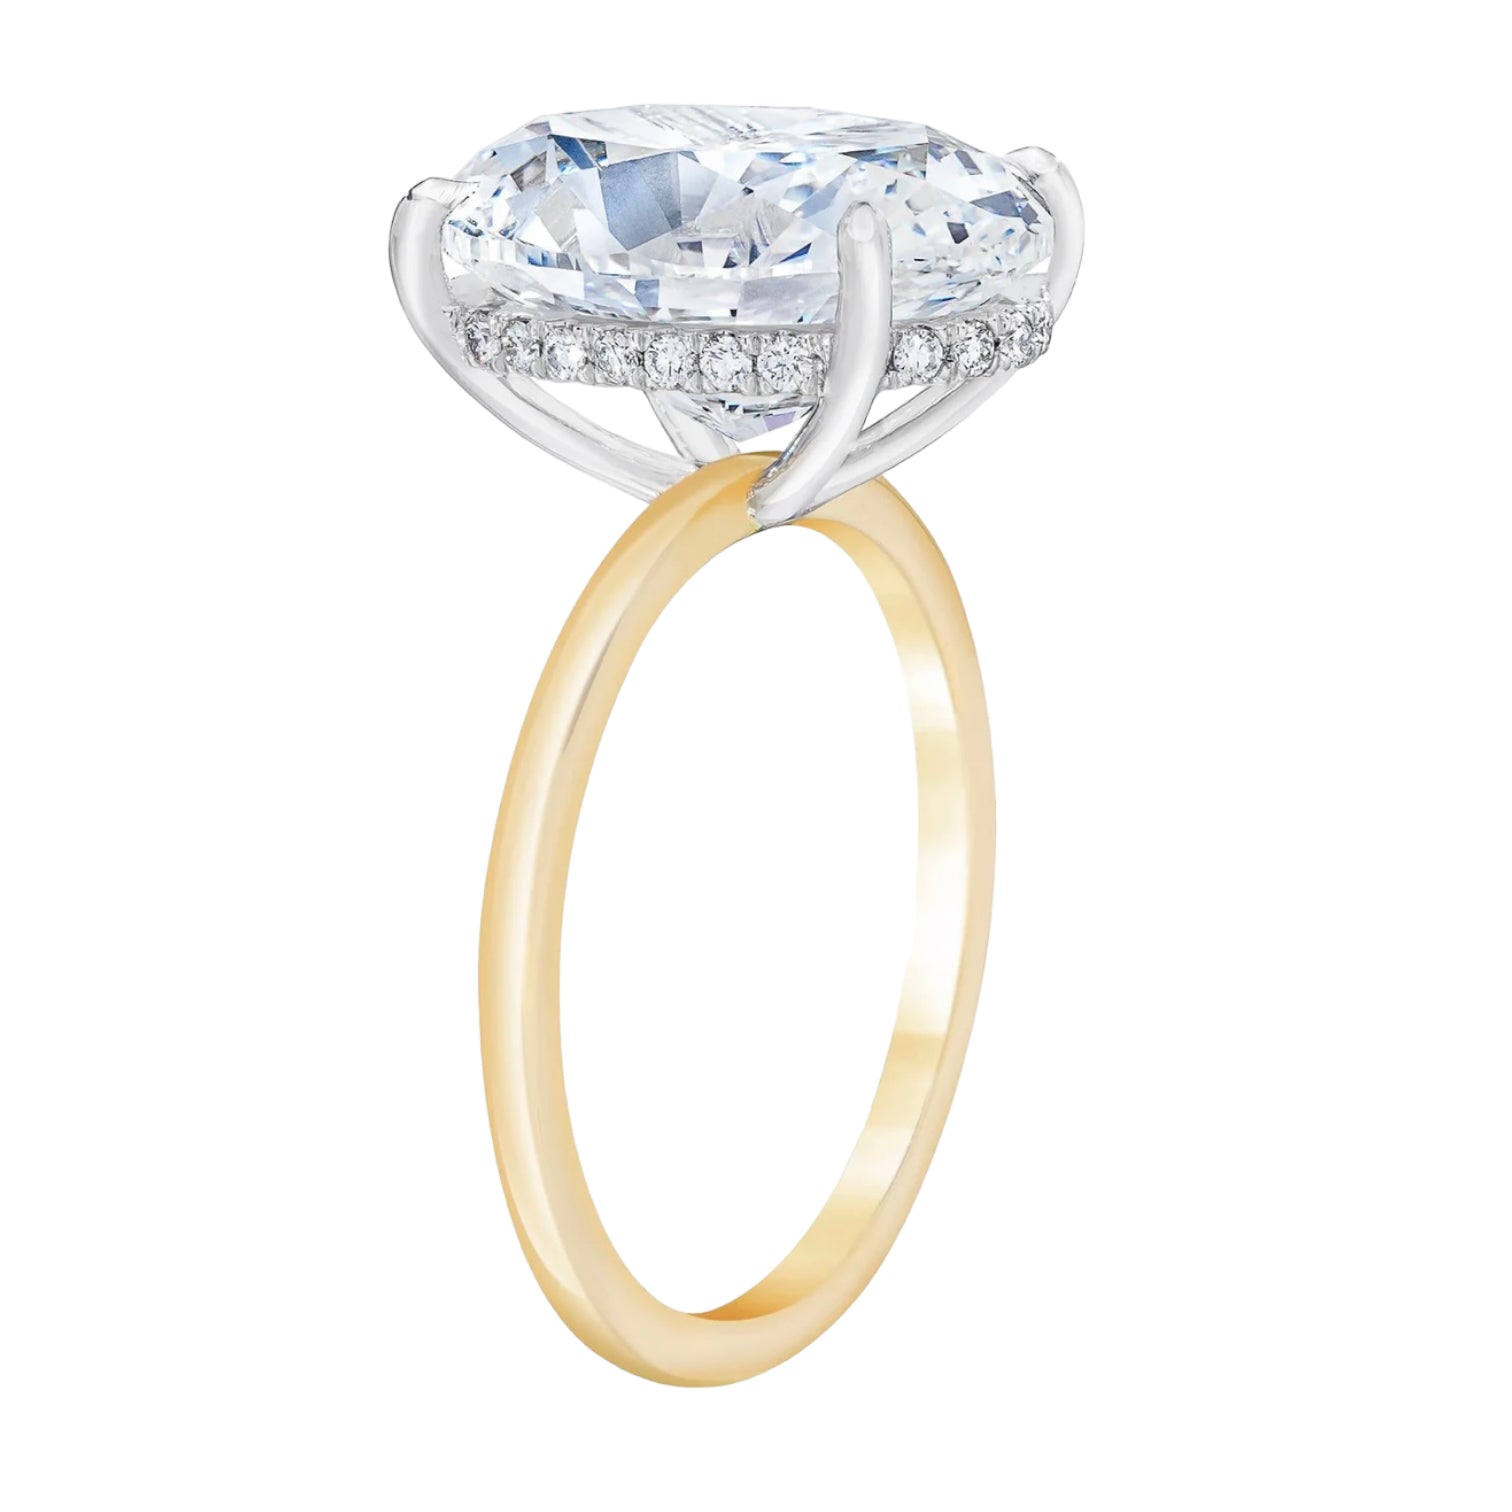 Diamond engagement ring hidden halo detail